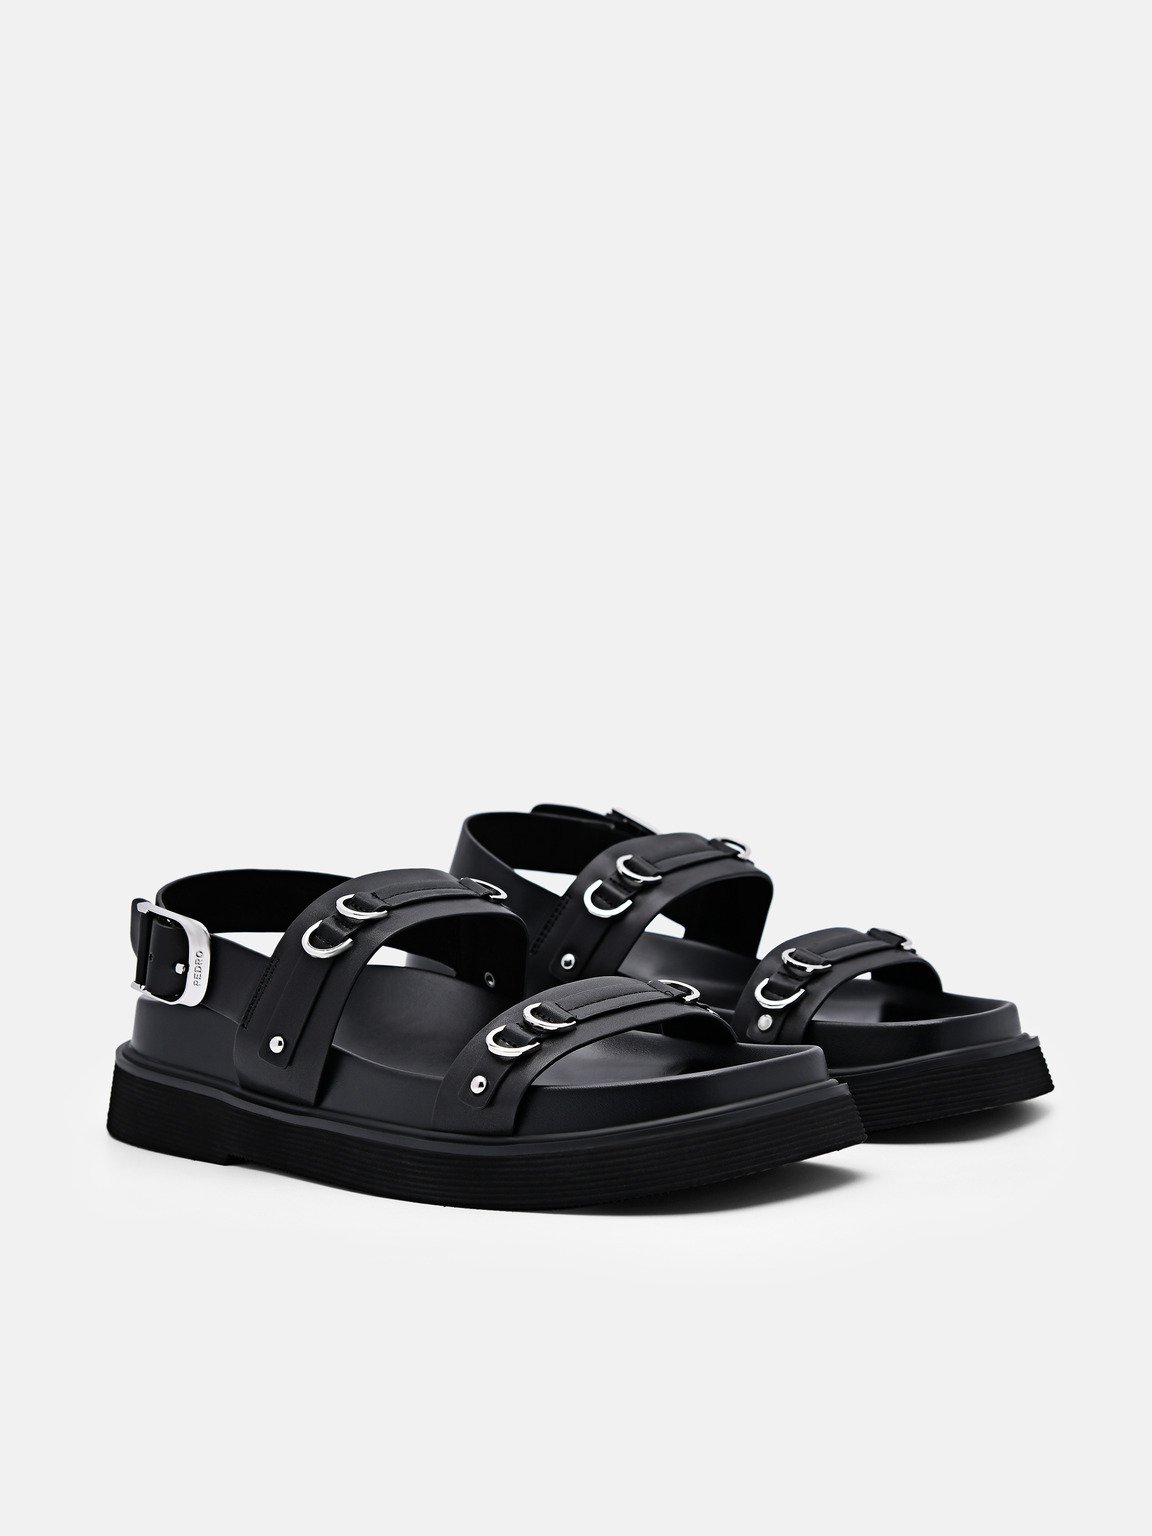 Helix Slingback Sandals, Black